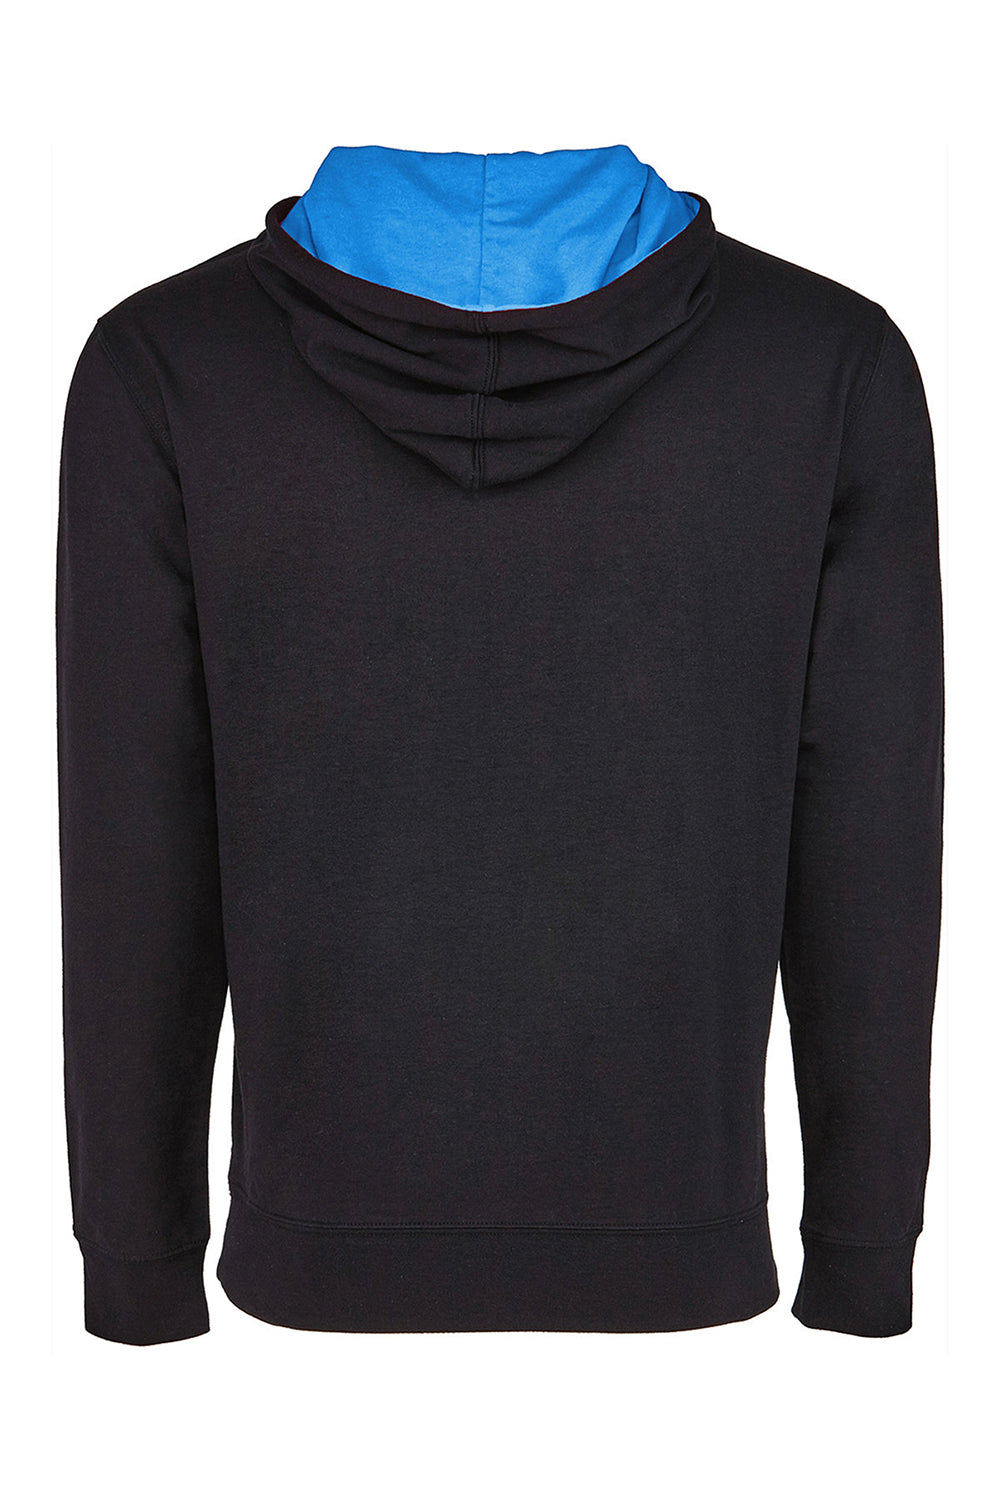 Next Level 9301 Mens French Terry Fleece Hooded Sweatshirt Hoodie Black/Turquoise Blue Flat Back